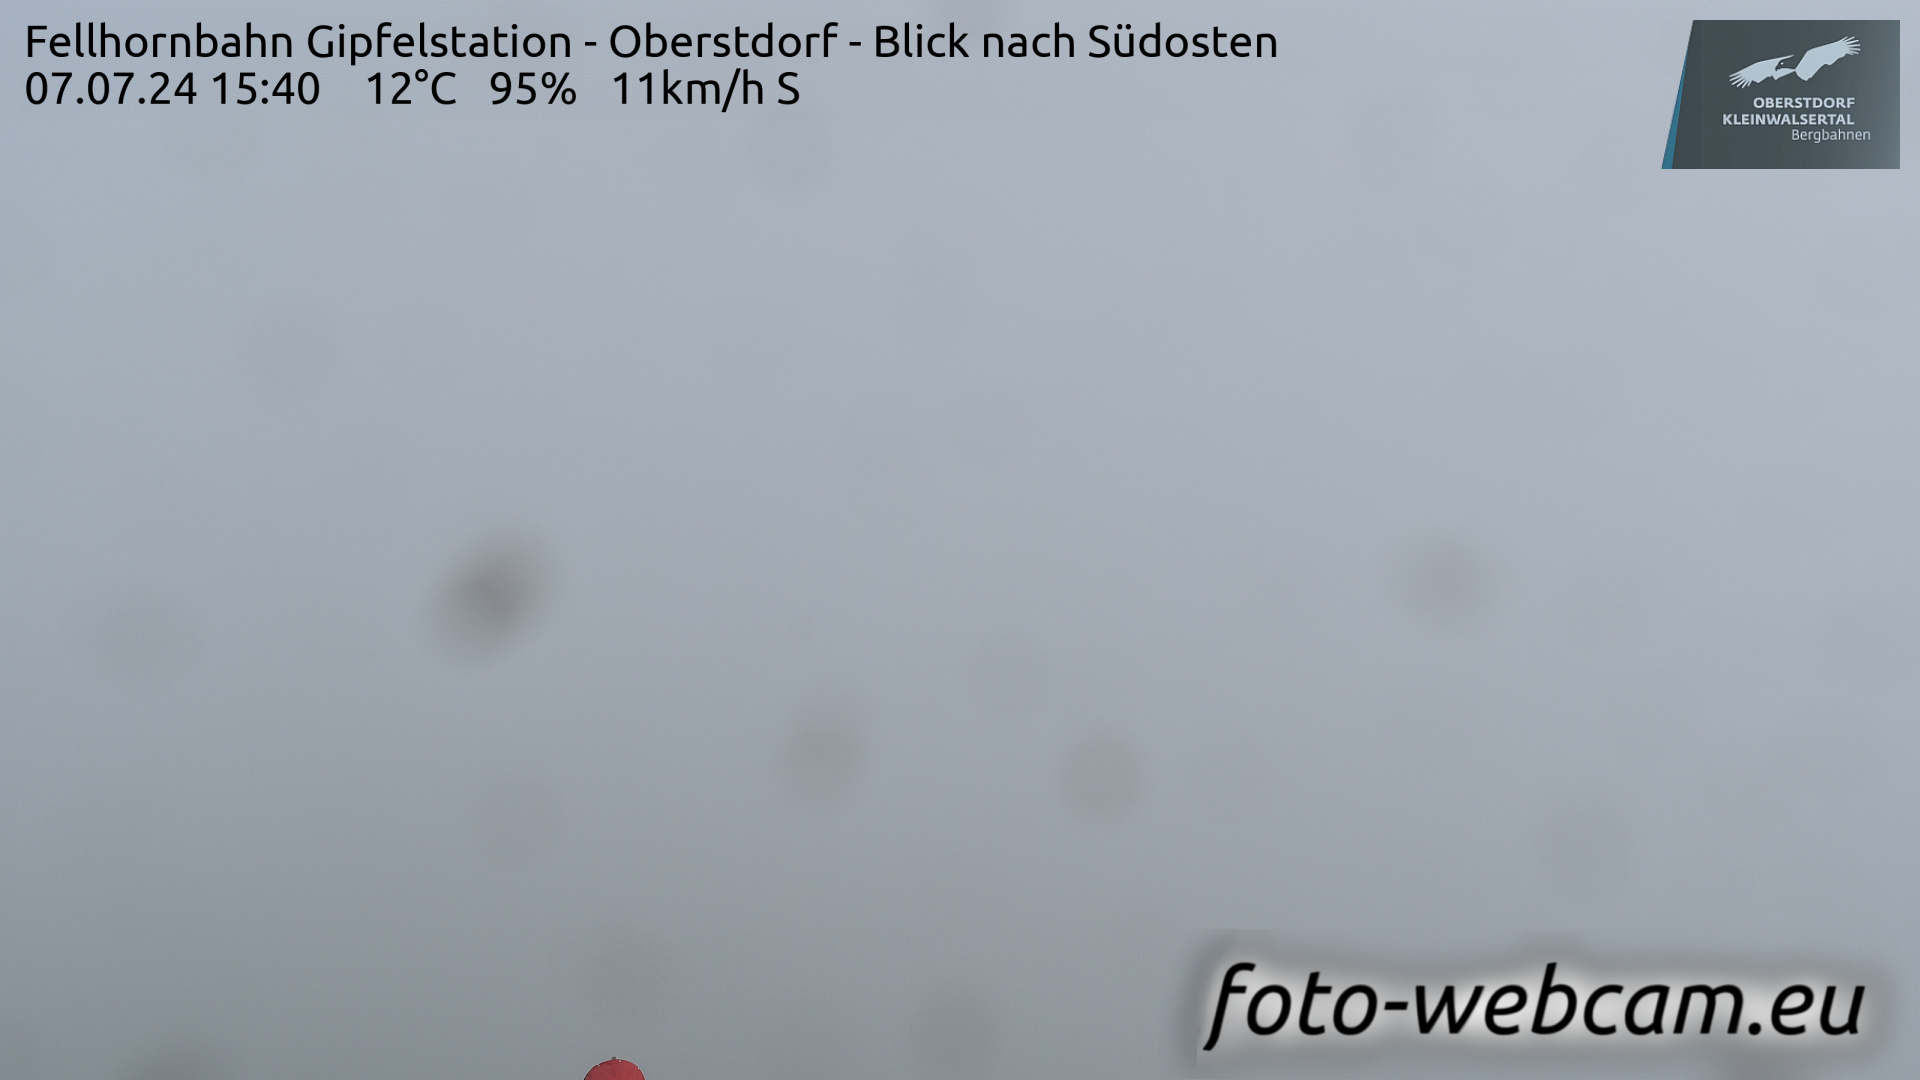 Oberstdorf Wed. 15:49